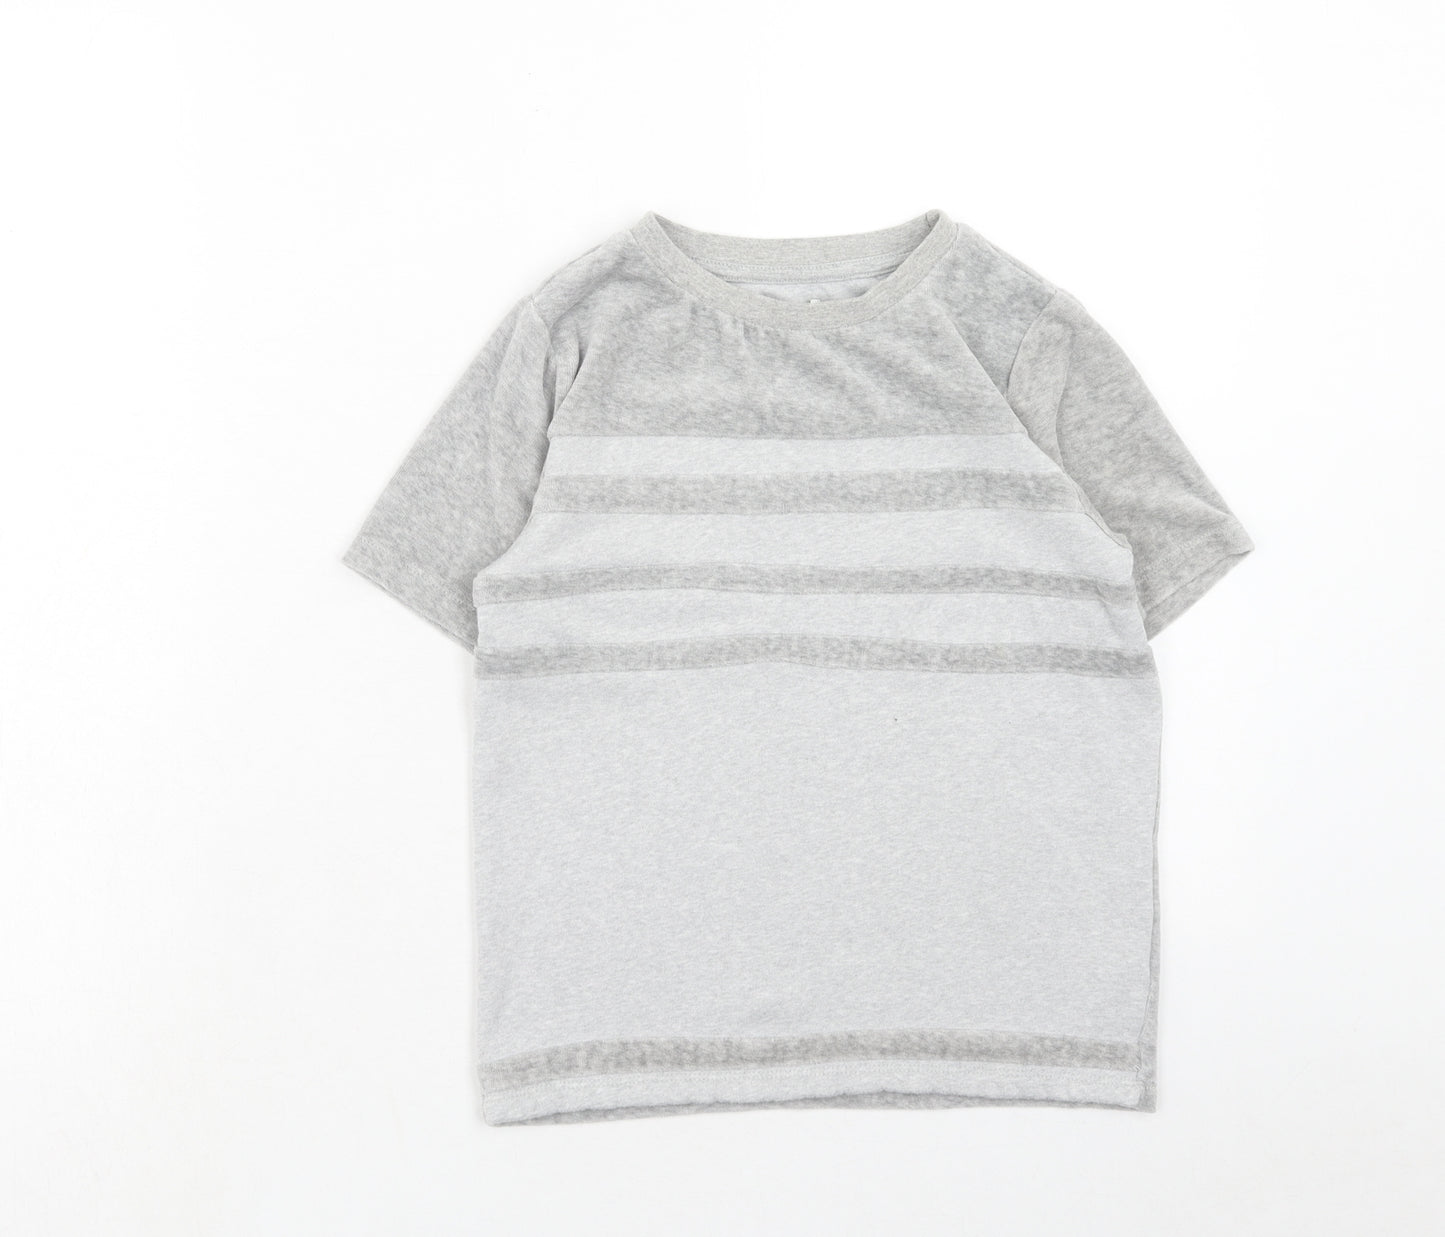 Preworn Girls Grey Geometric Cotton Basic T-Shirt Size 8 Years Round Neck Pullover